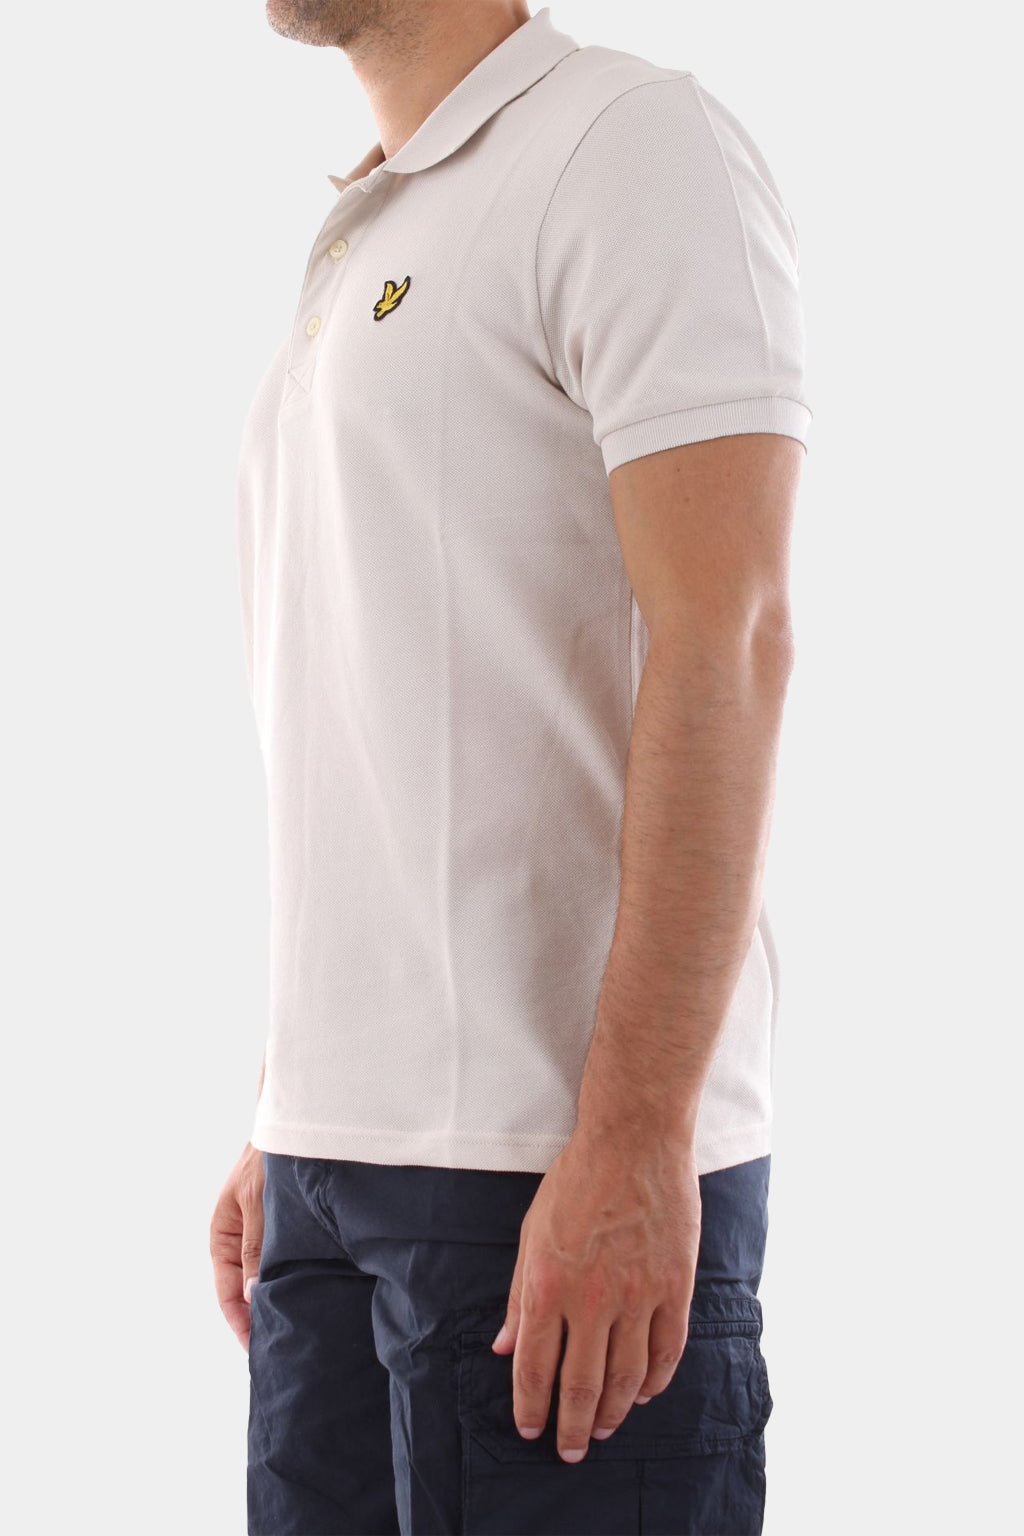 Lyle & Scott - Piqué Polo Shirt